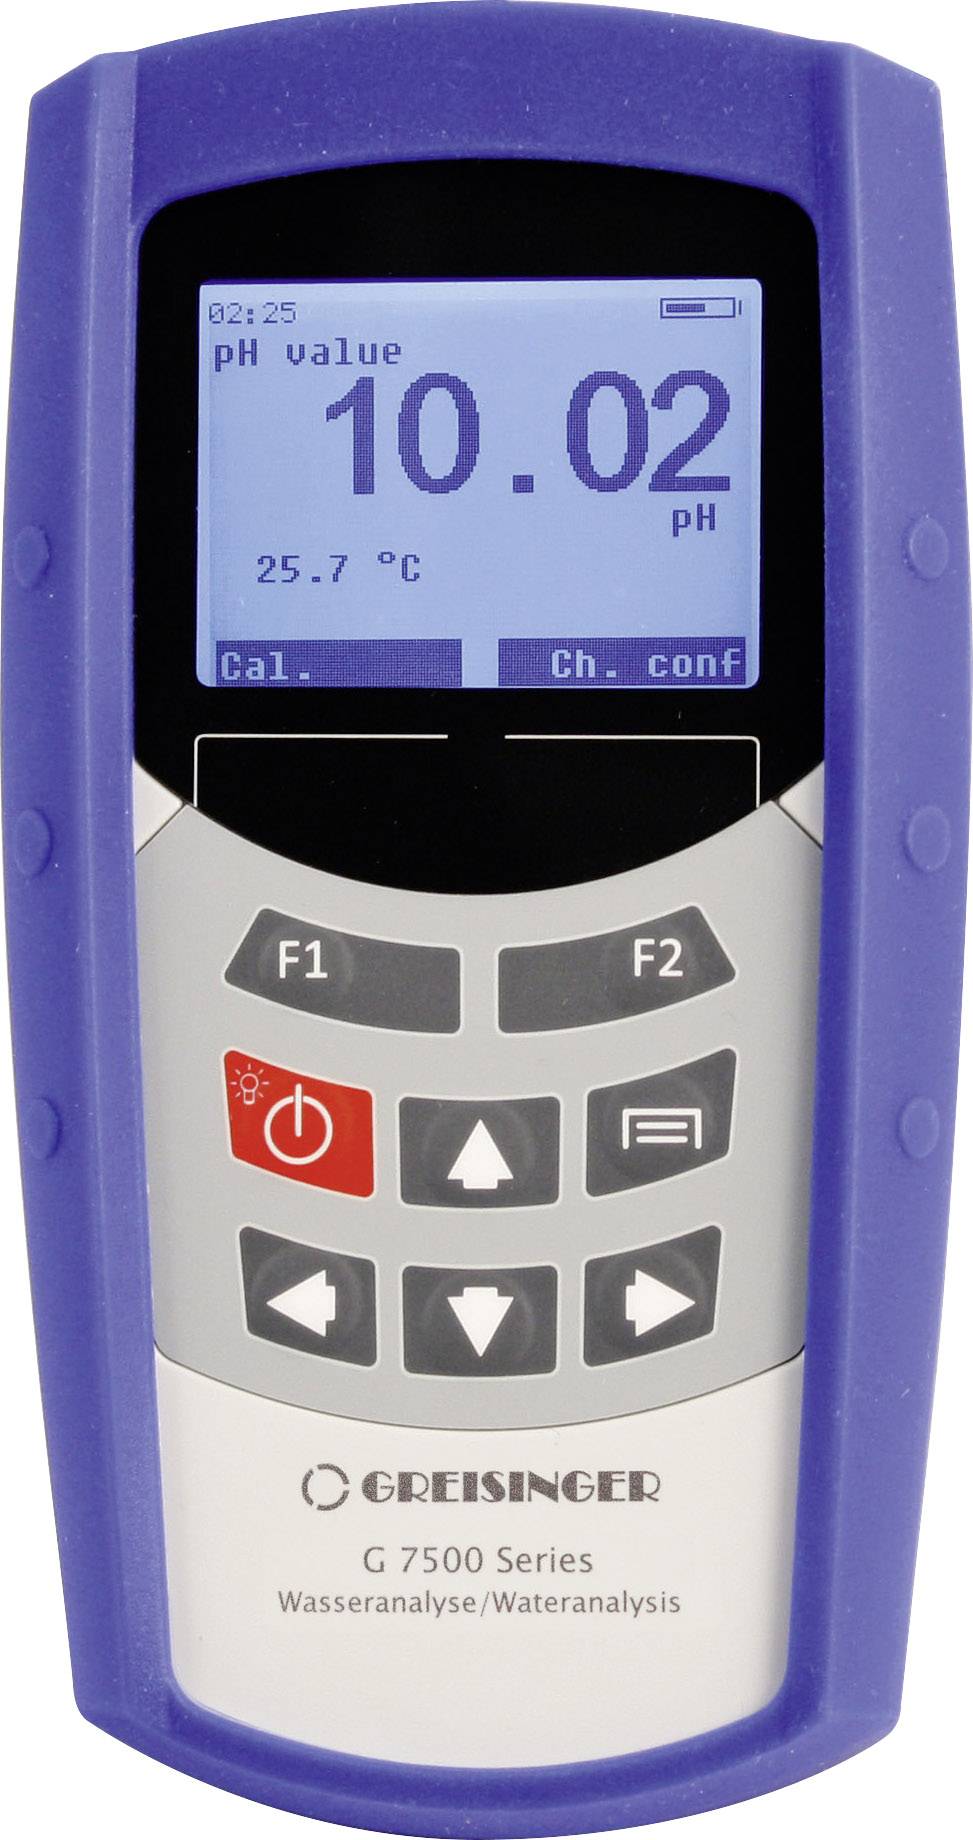 GHM Greisinger G7500 Kombi-Messgerät pH-Wert, Redox (ORP), Temperatur, O2-Sättigung, O2